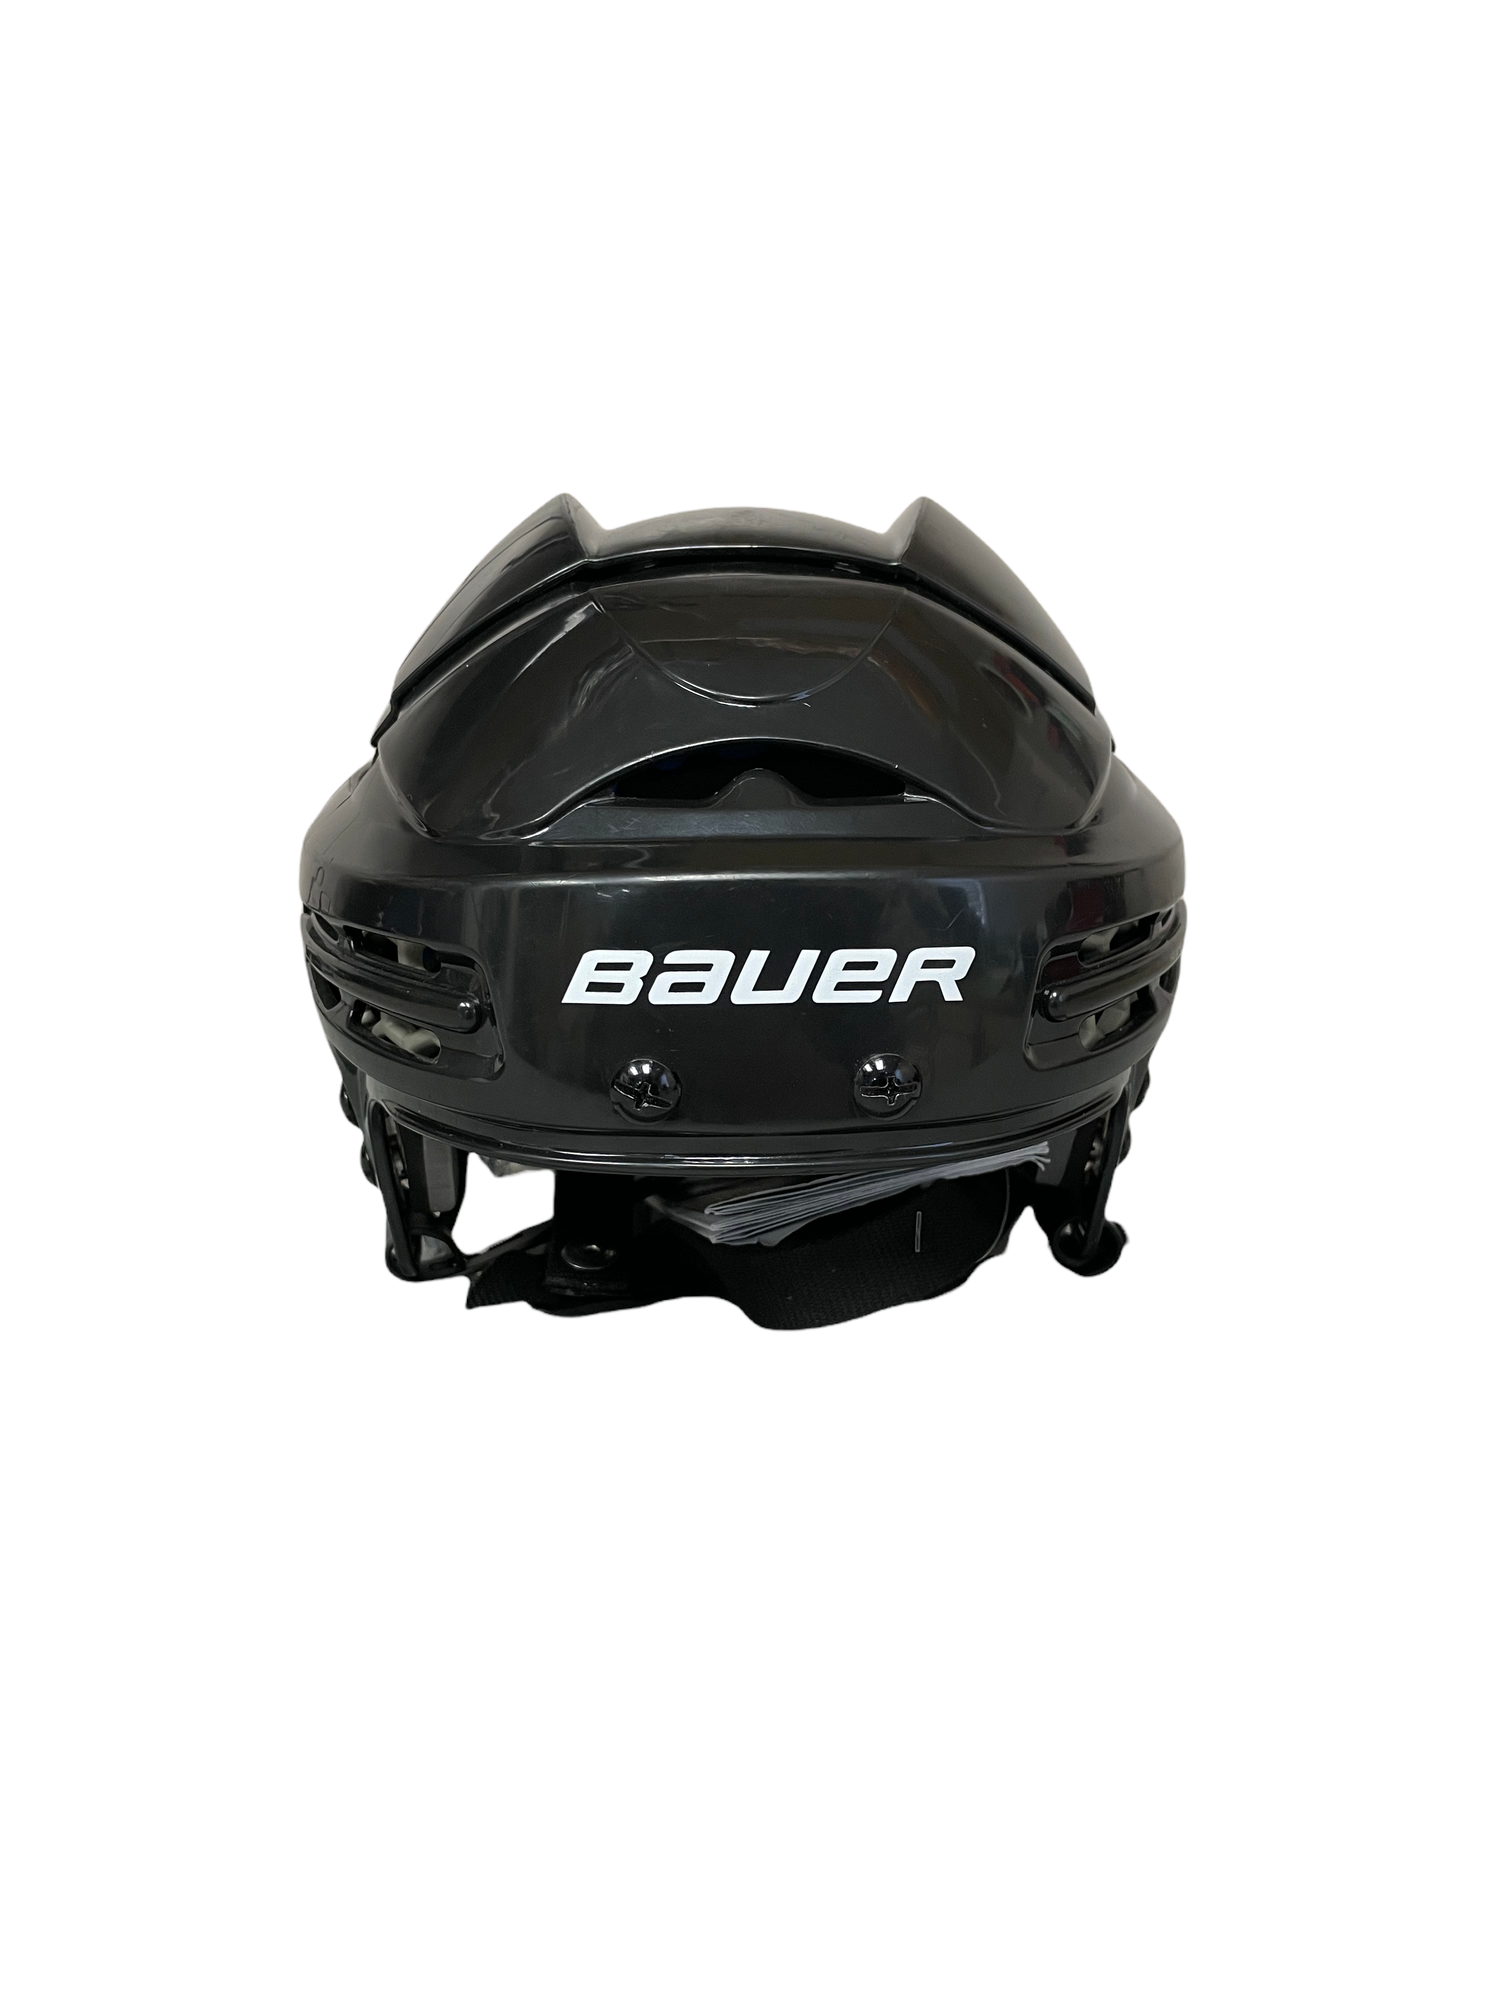 New Bauer 5100 Black Small Helmet